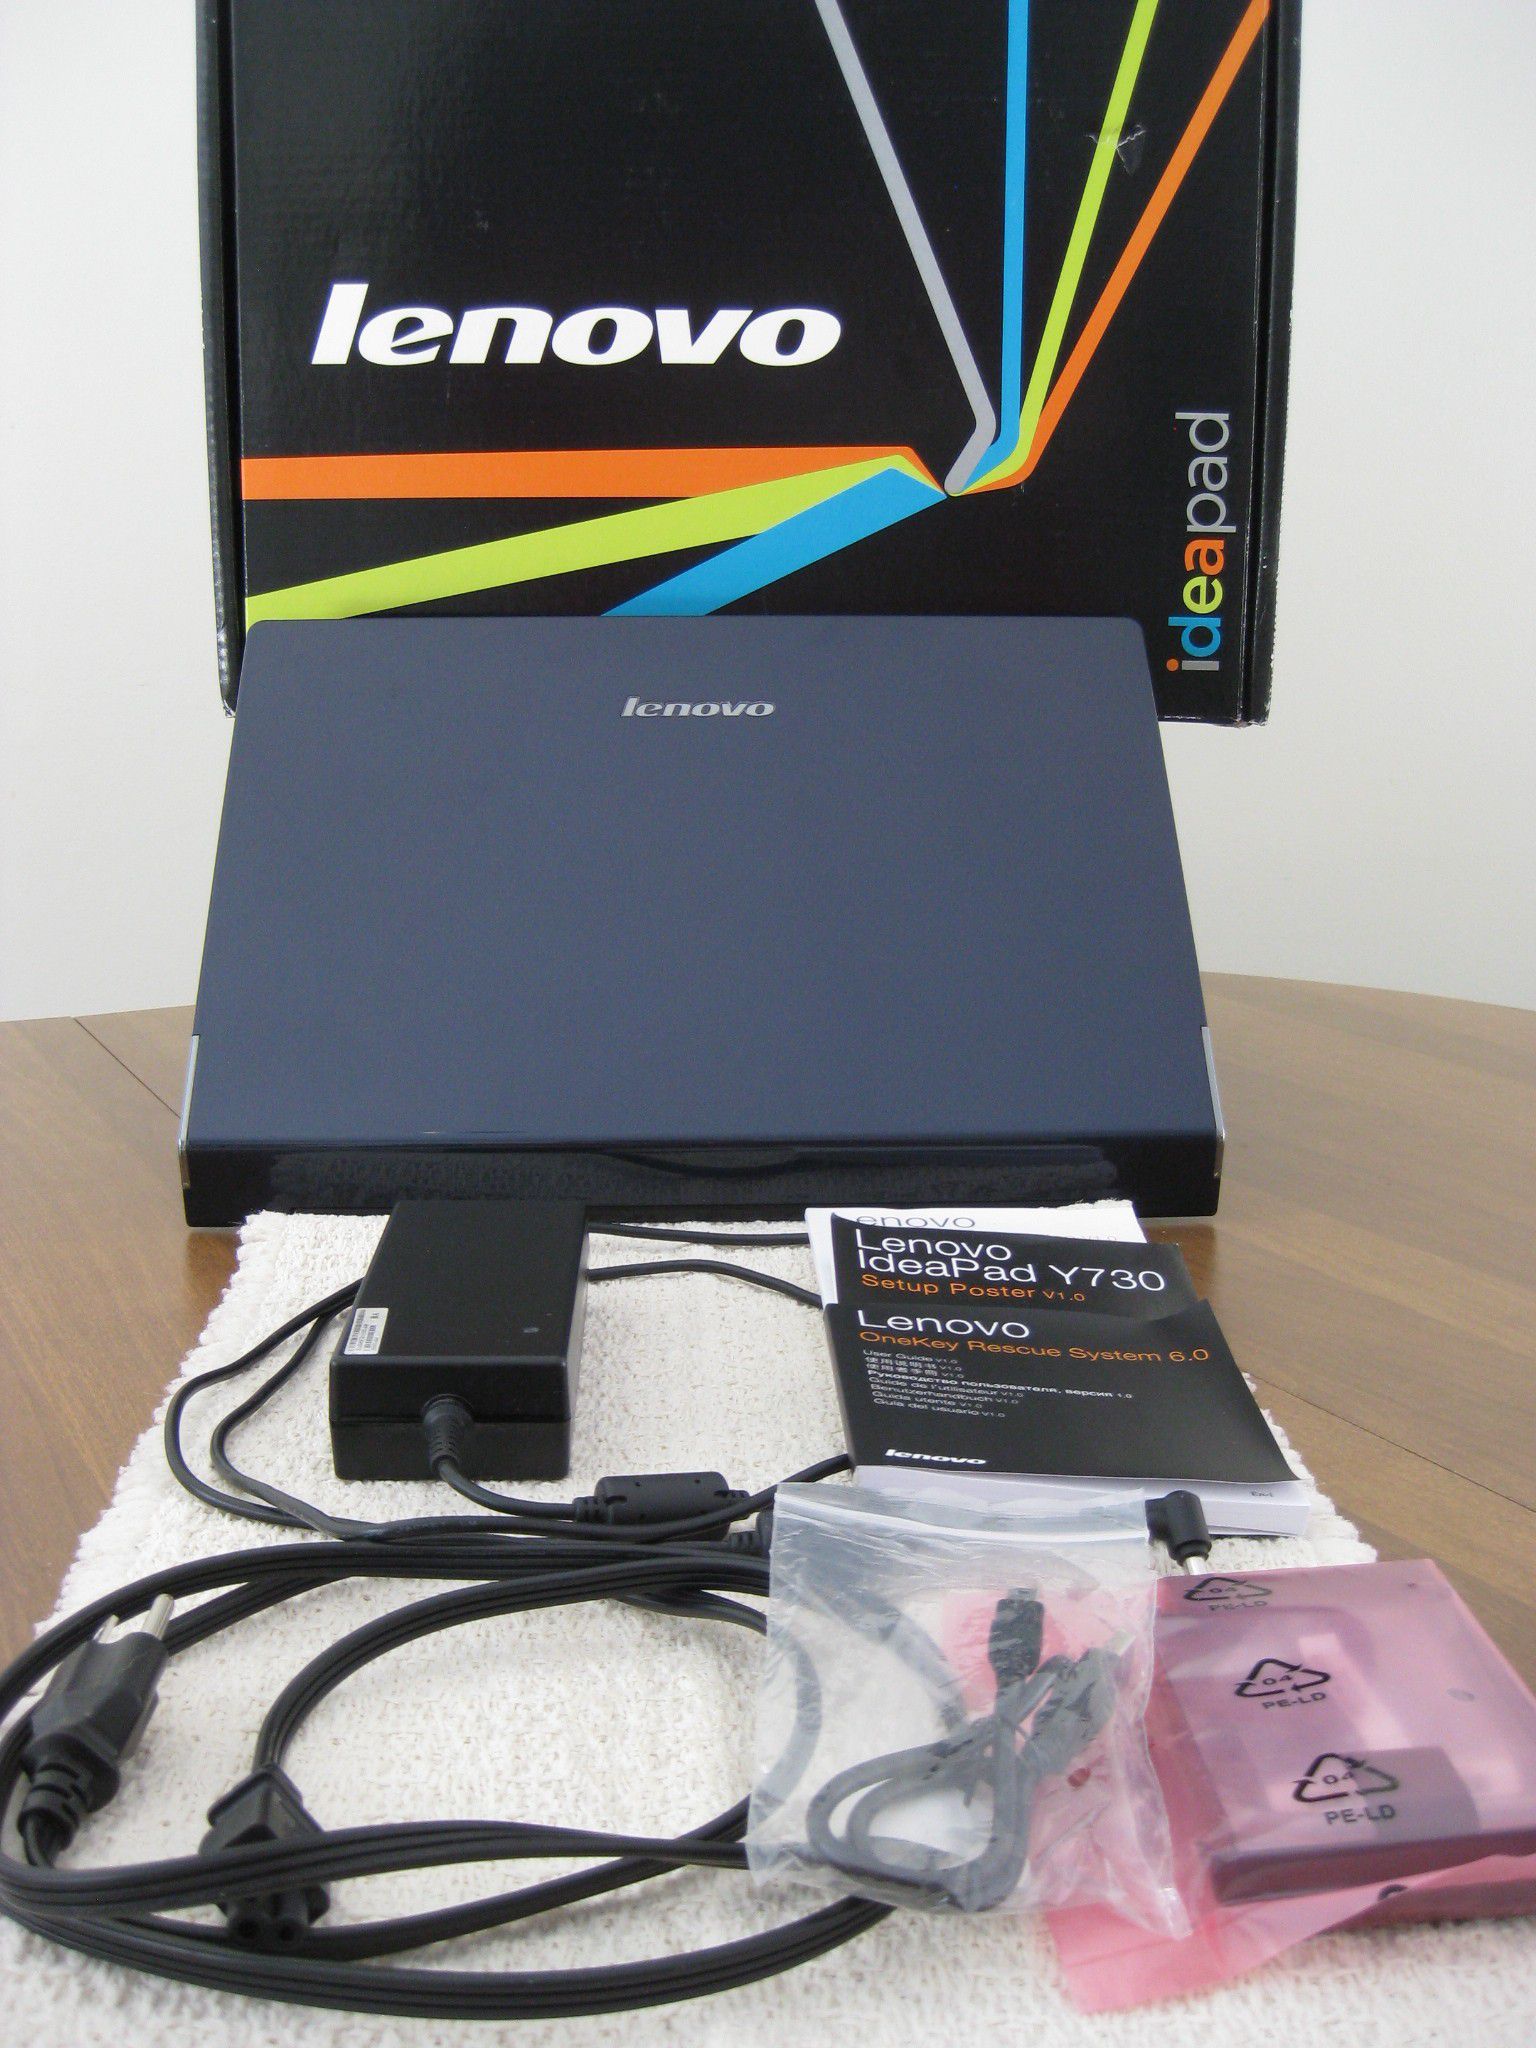 Lenovo IdeaPad Y730 laptop, older model